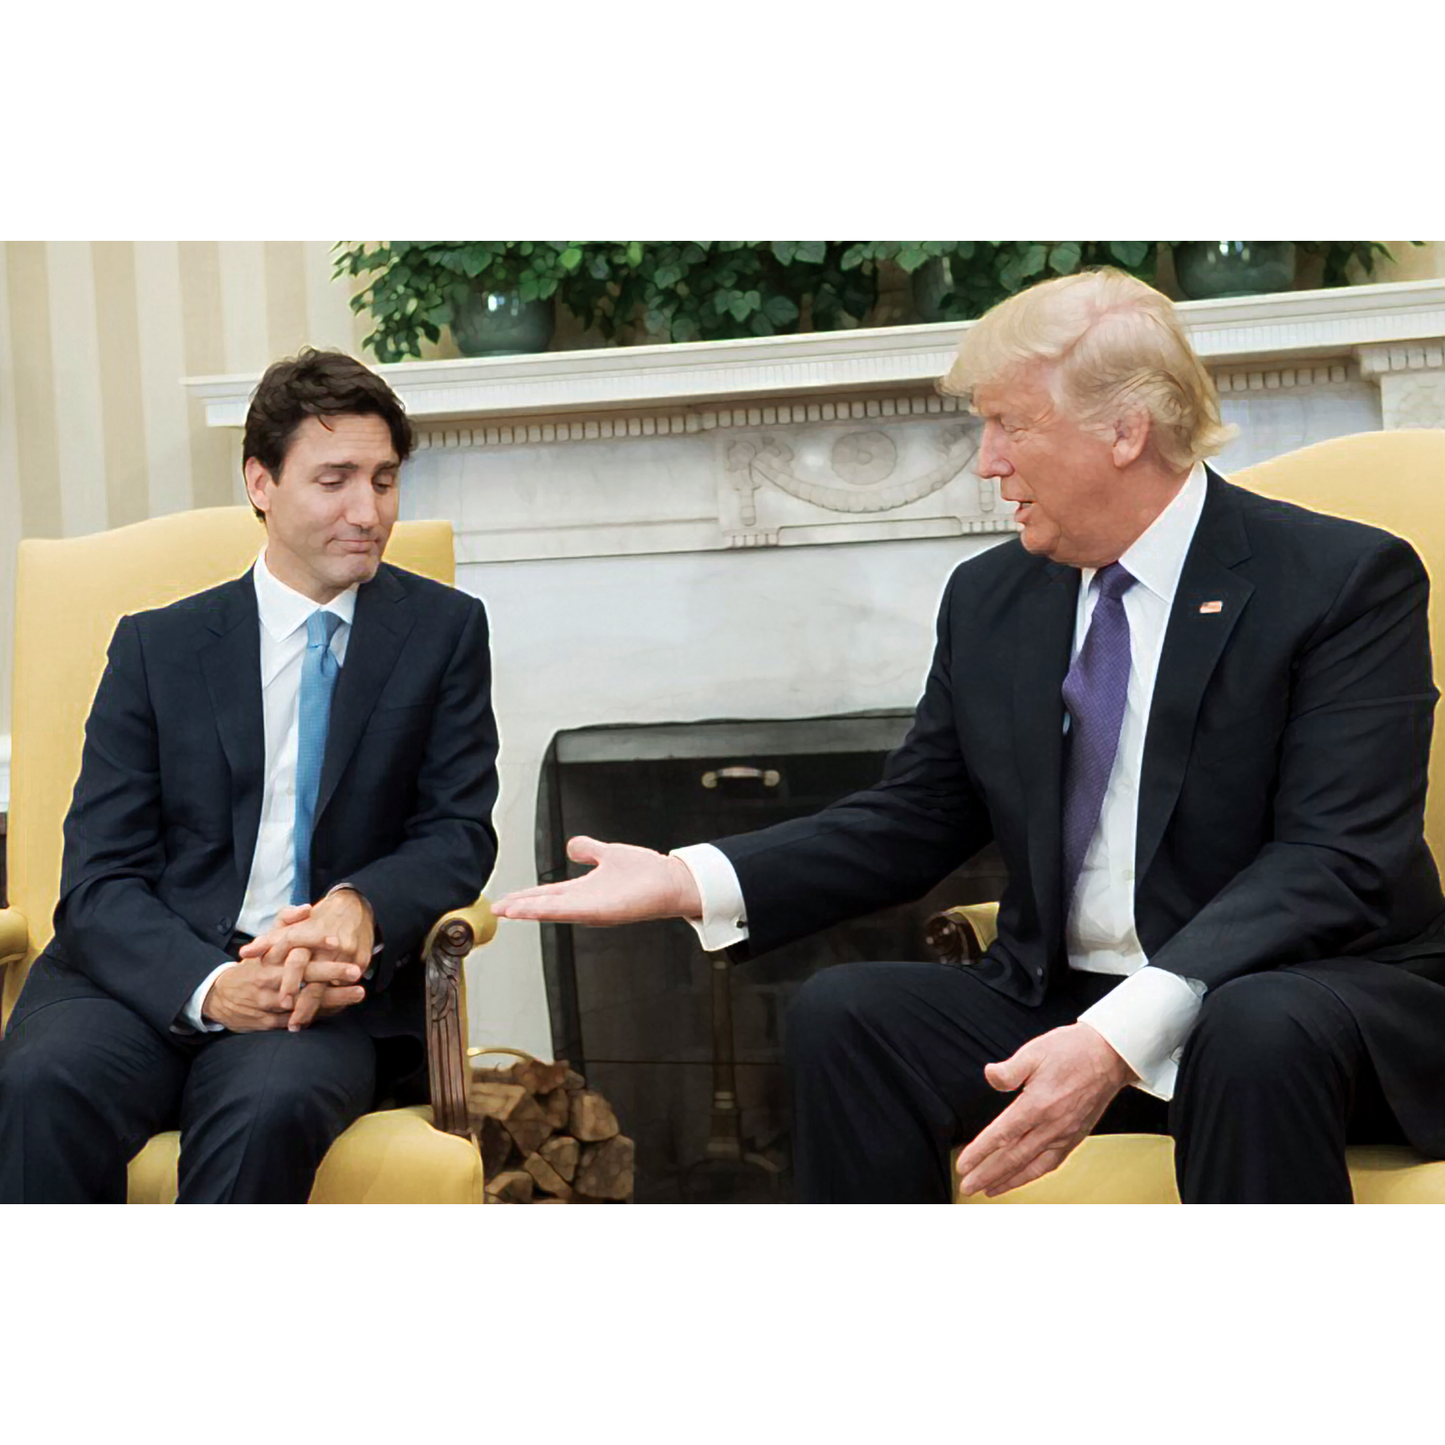 CCT0208 Justin Trudeau and Donald Trump Handshake 2017 Postcard